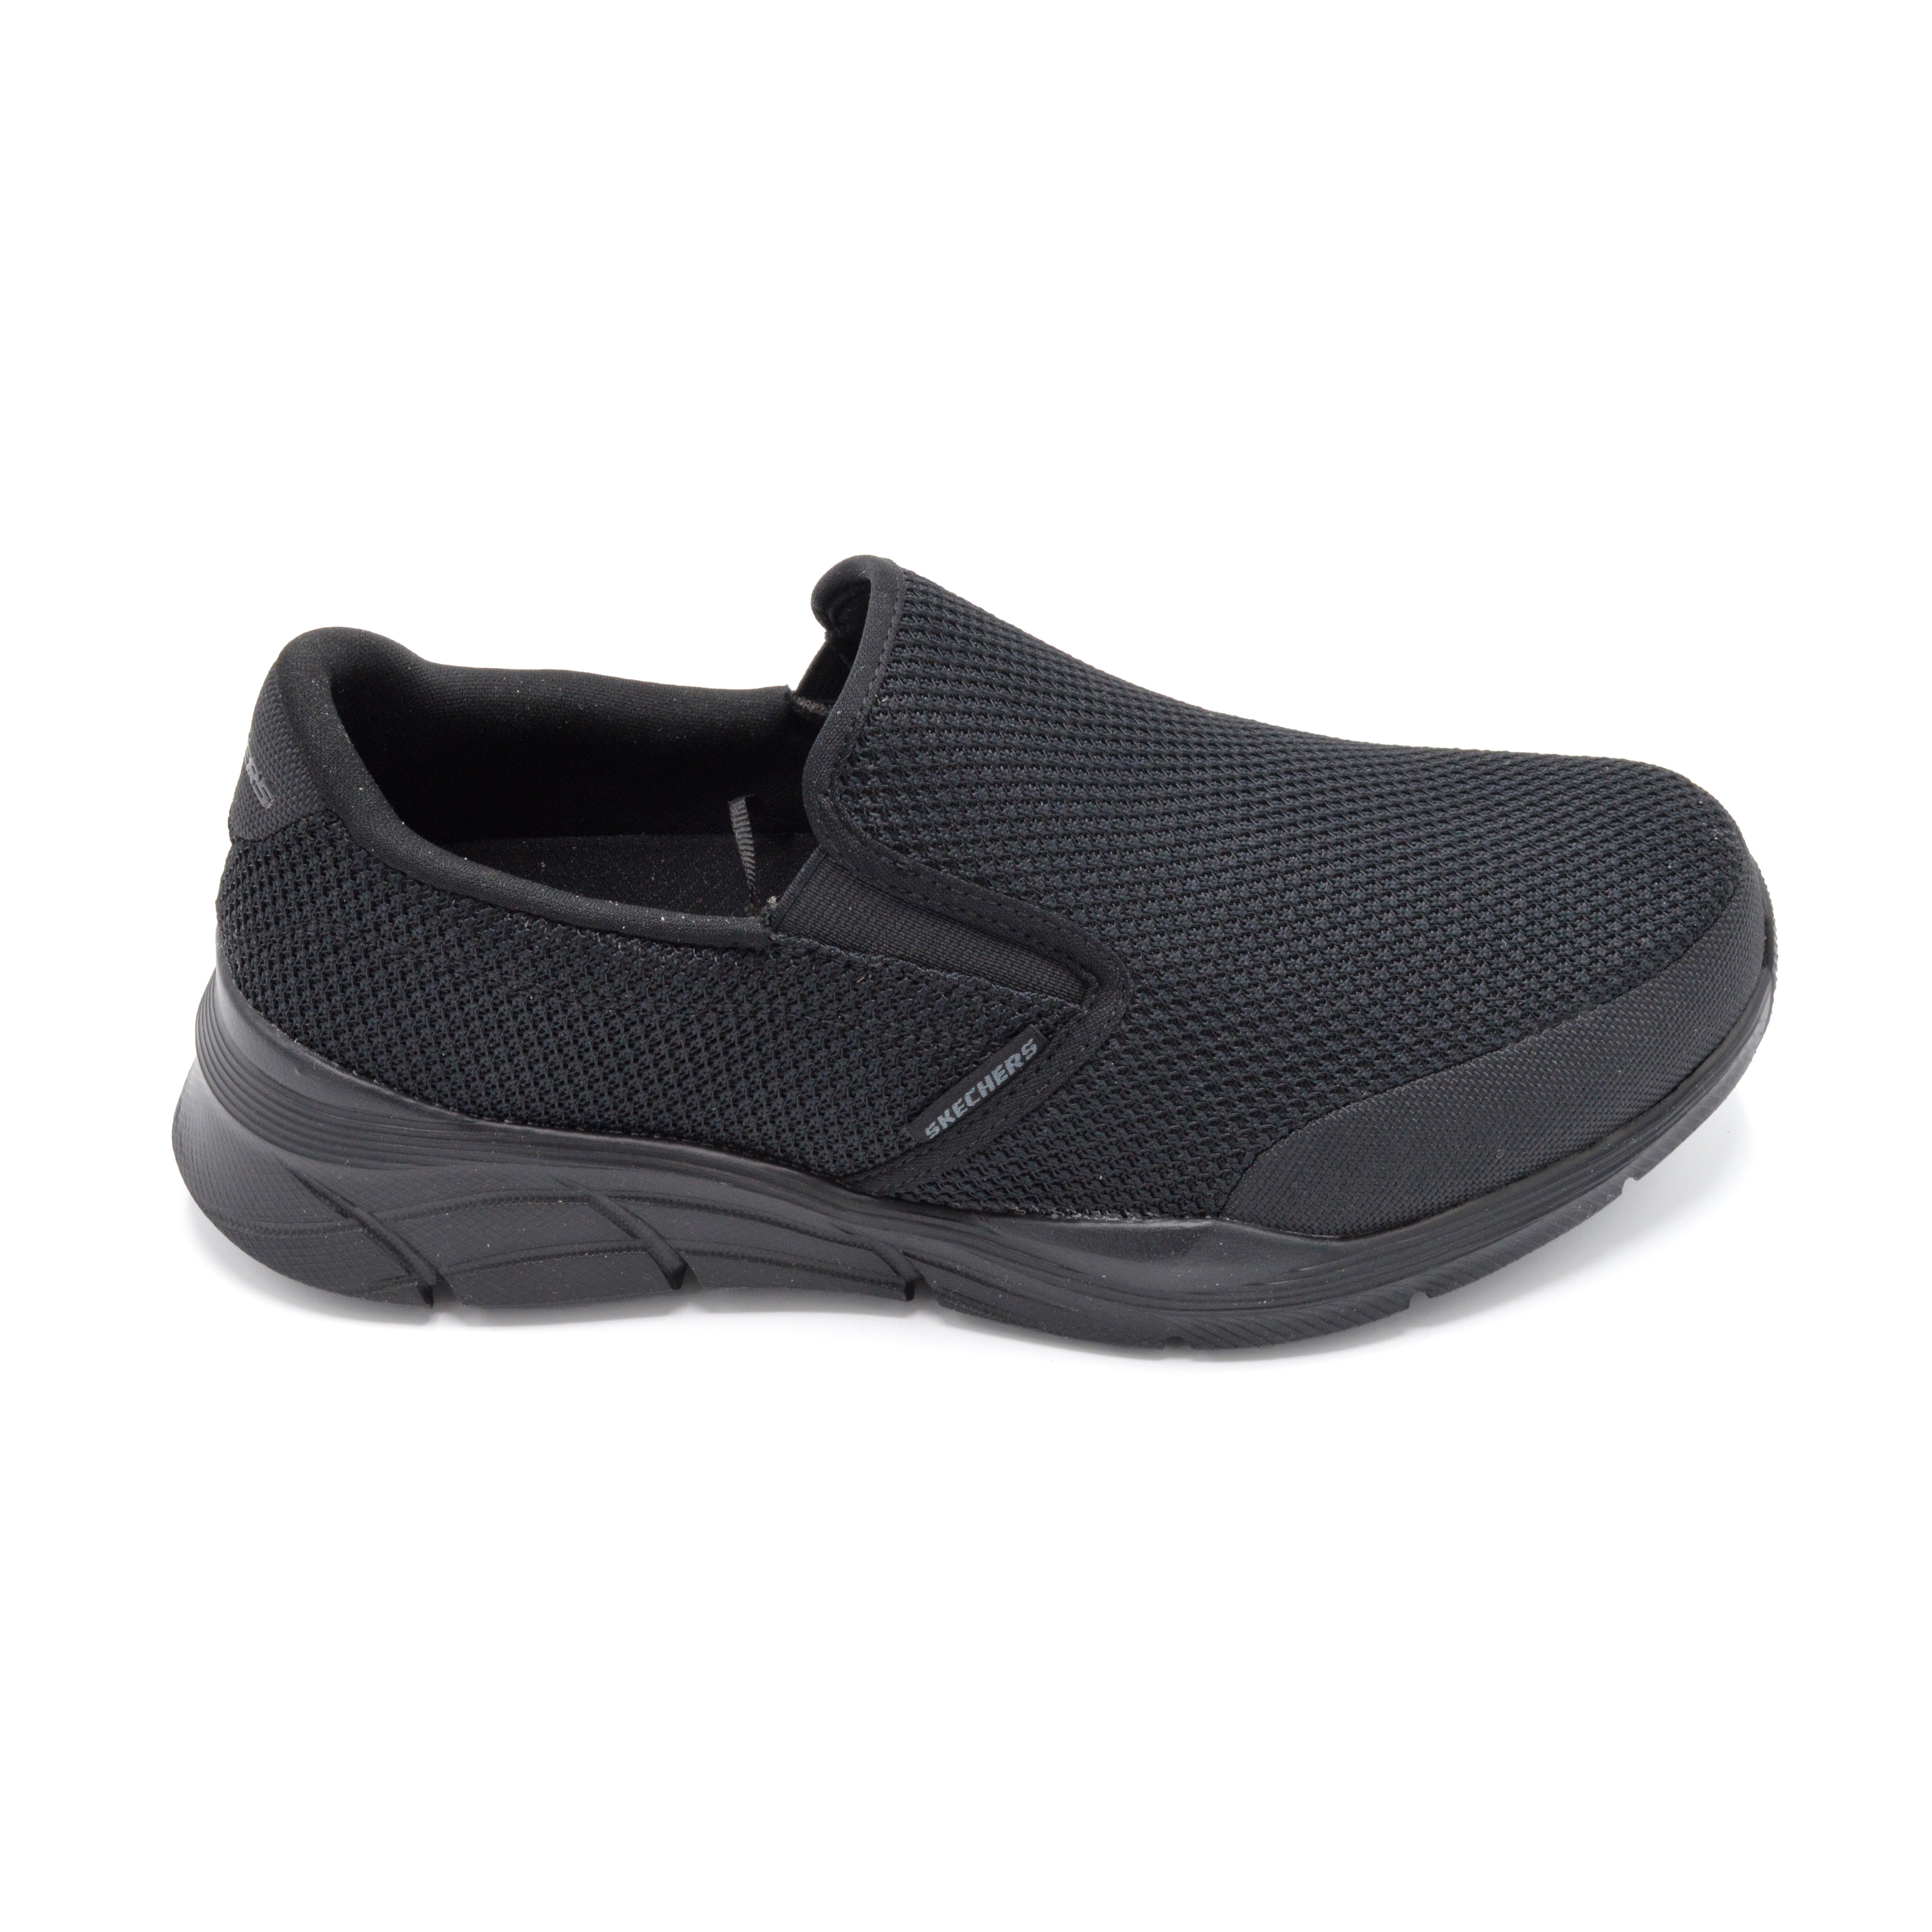 Skechers Krimlin -Extra Wide Slip On - Black - 6E Fit — Wide Shoes